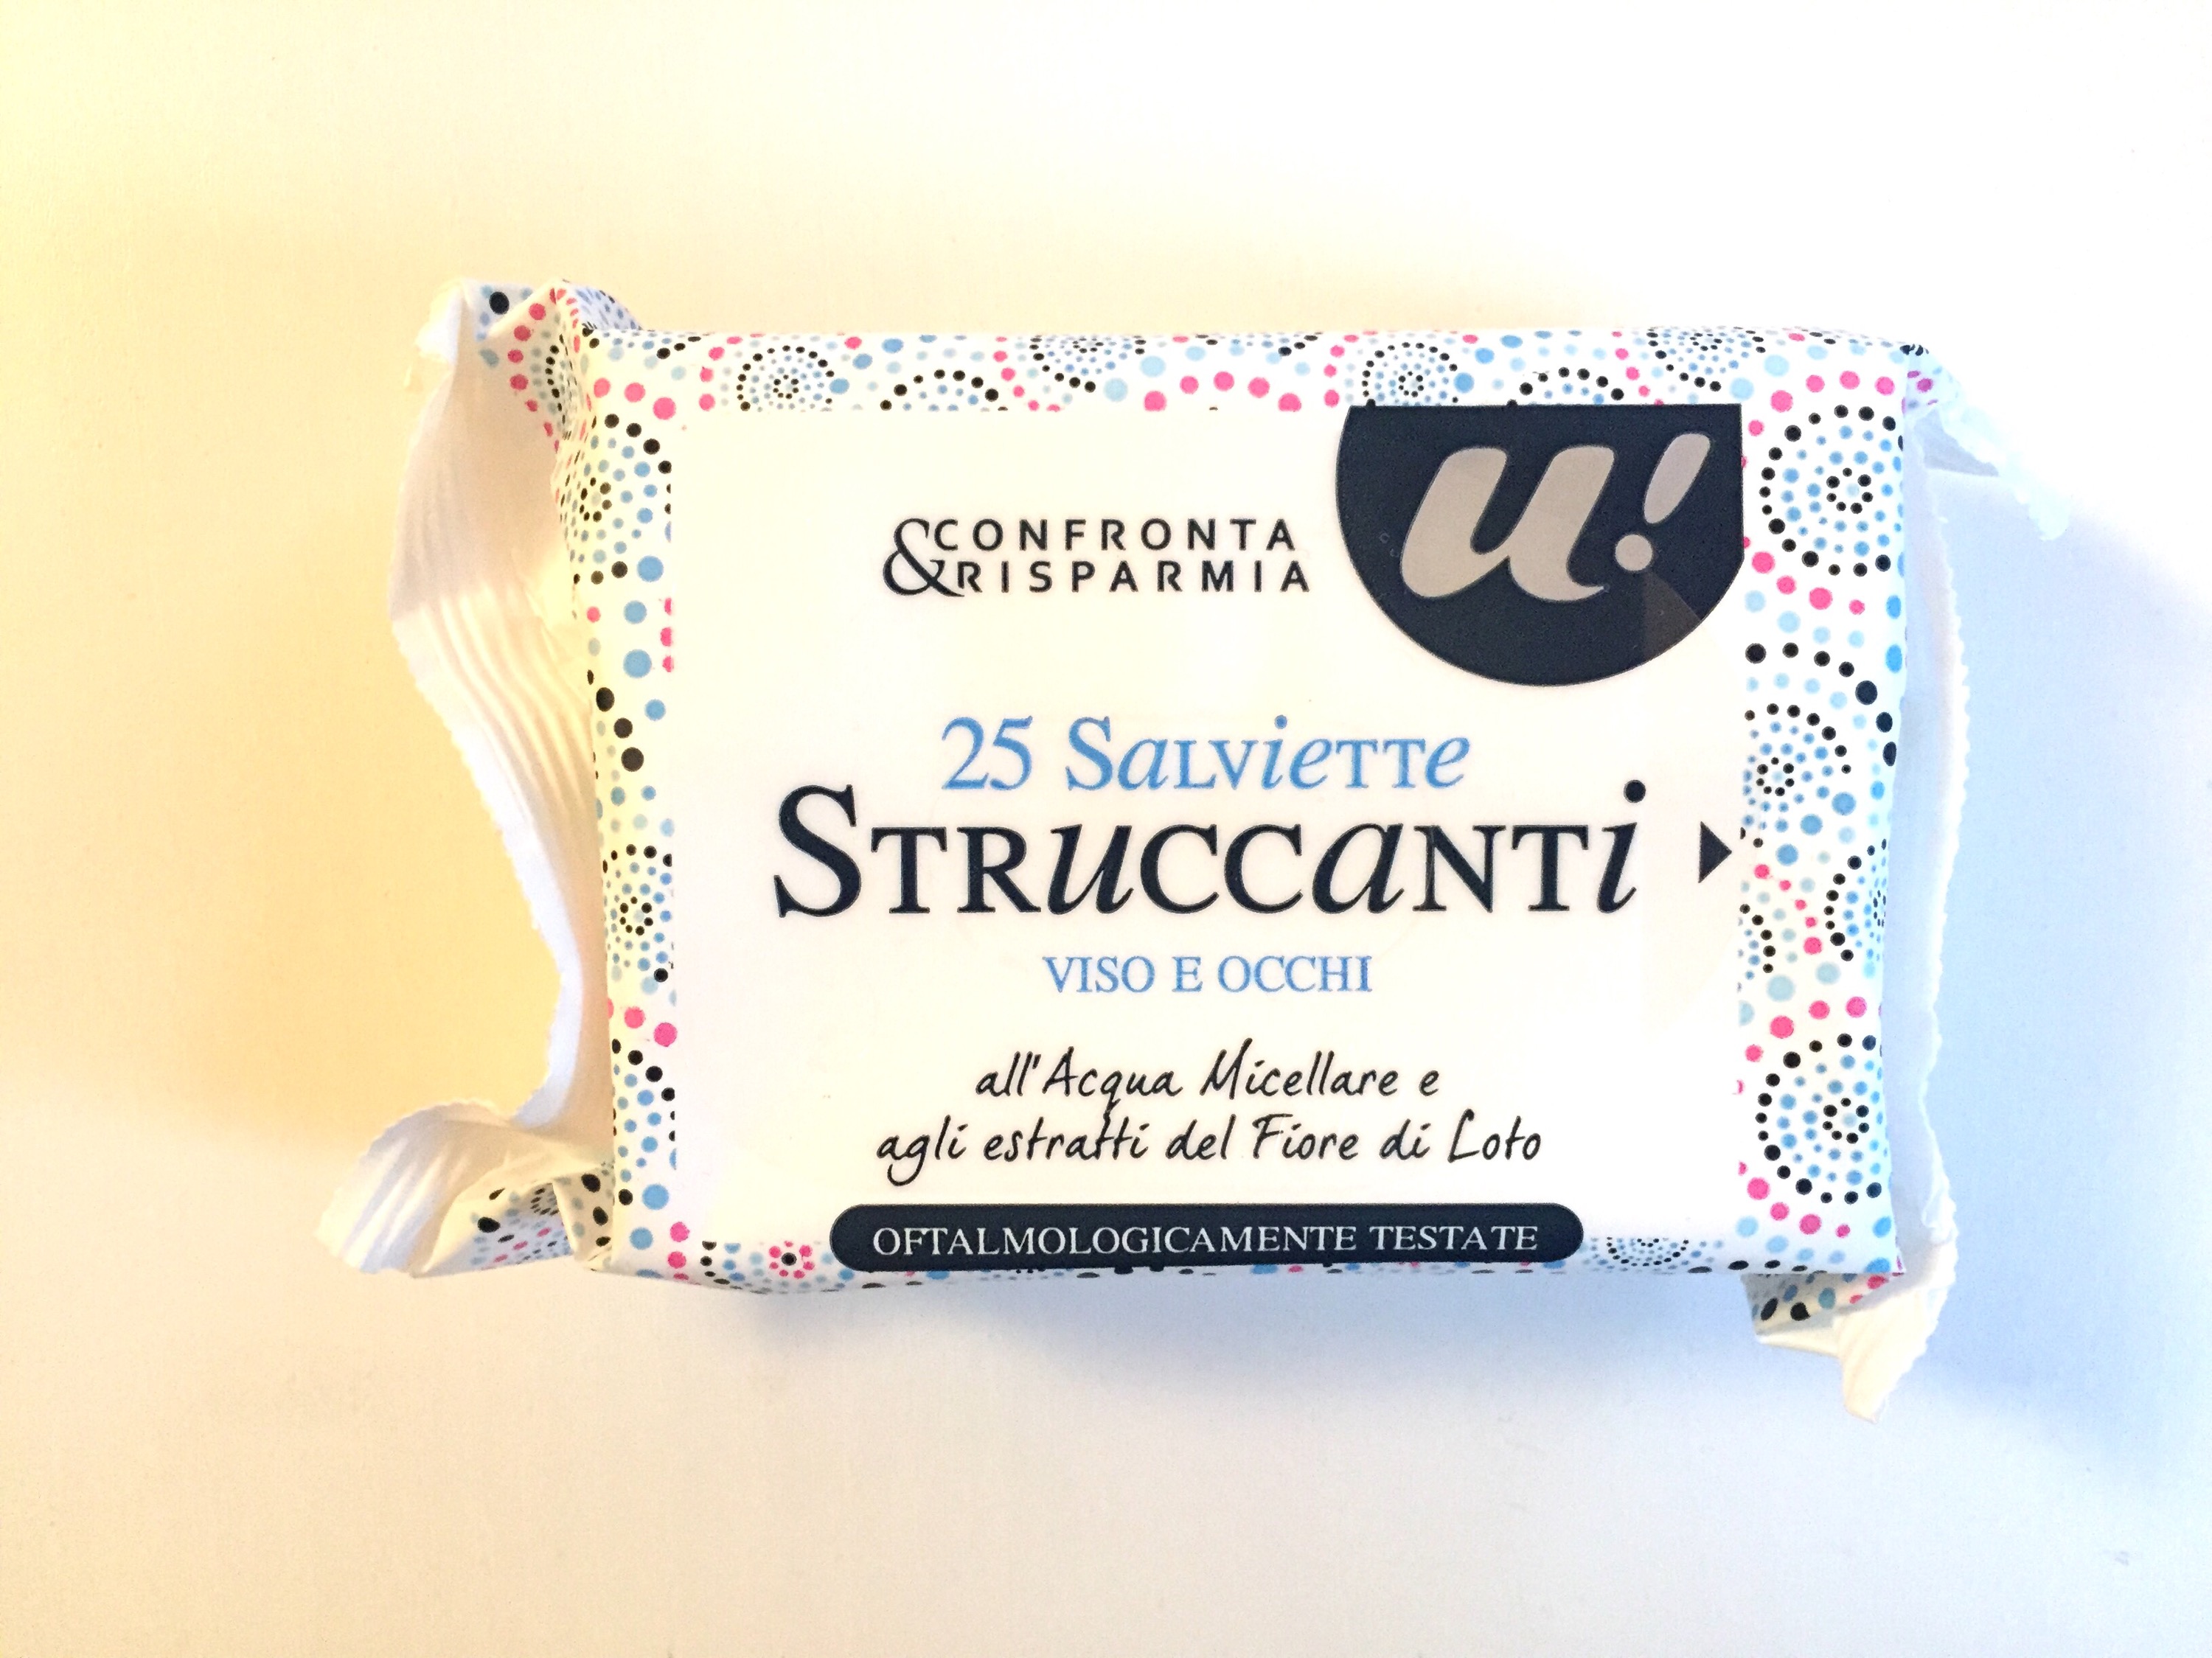 Salviettine Struccanti